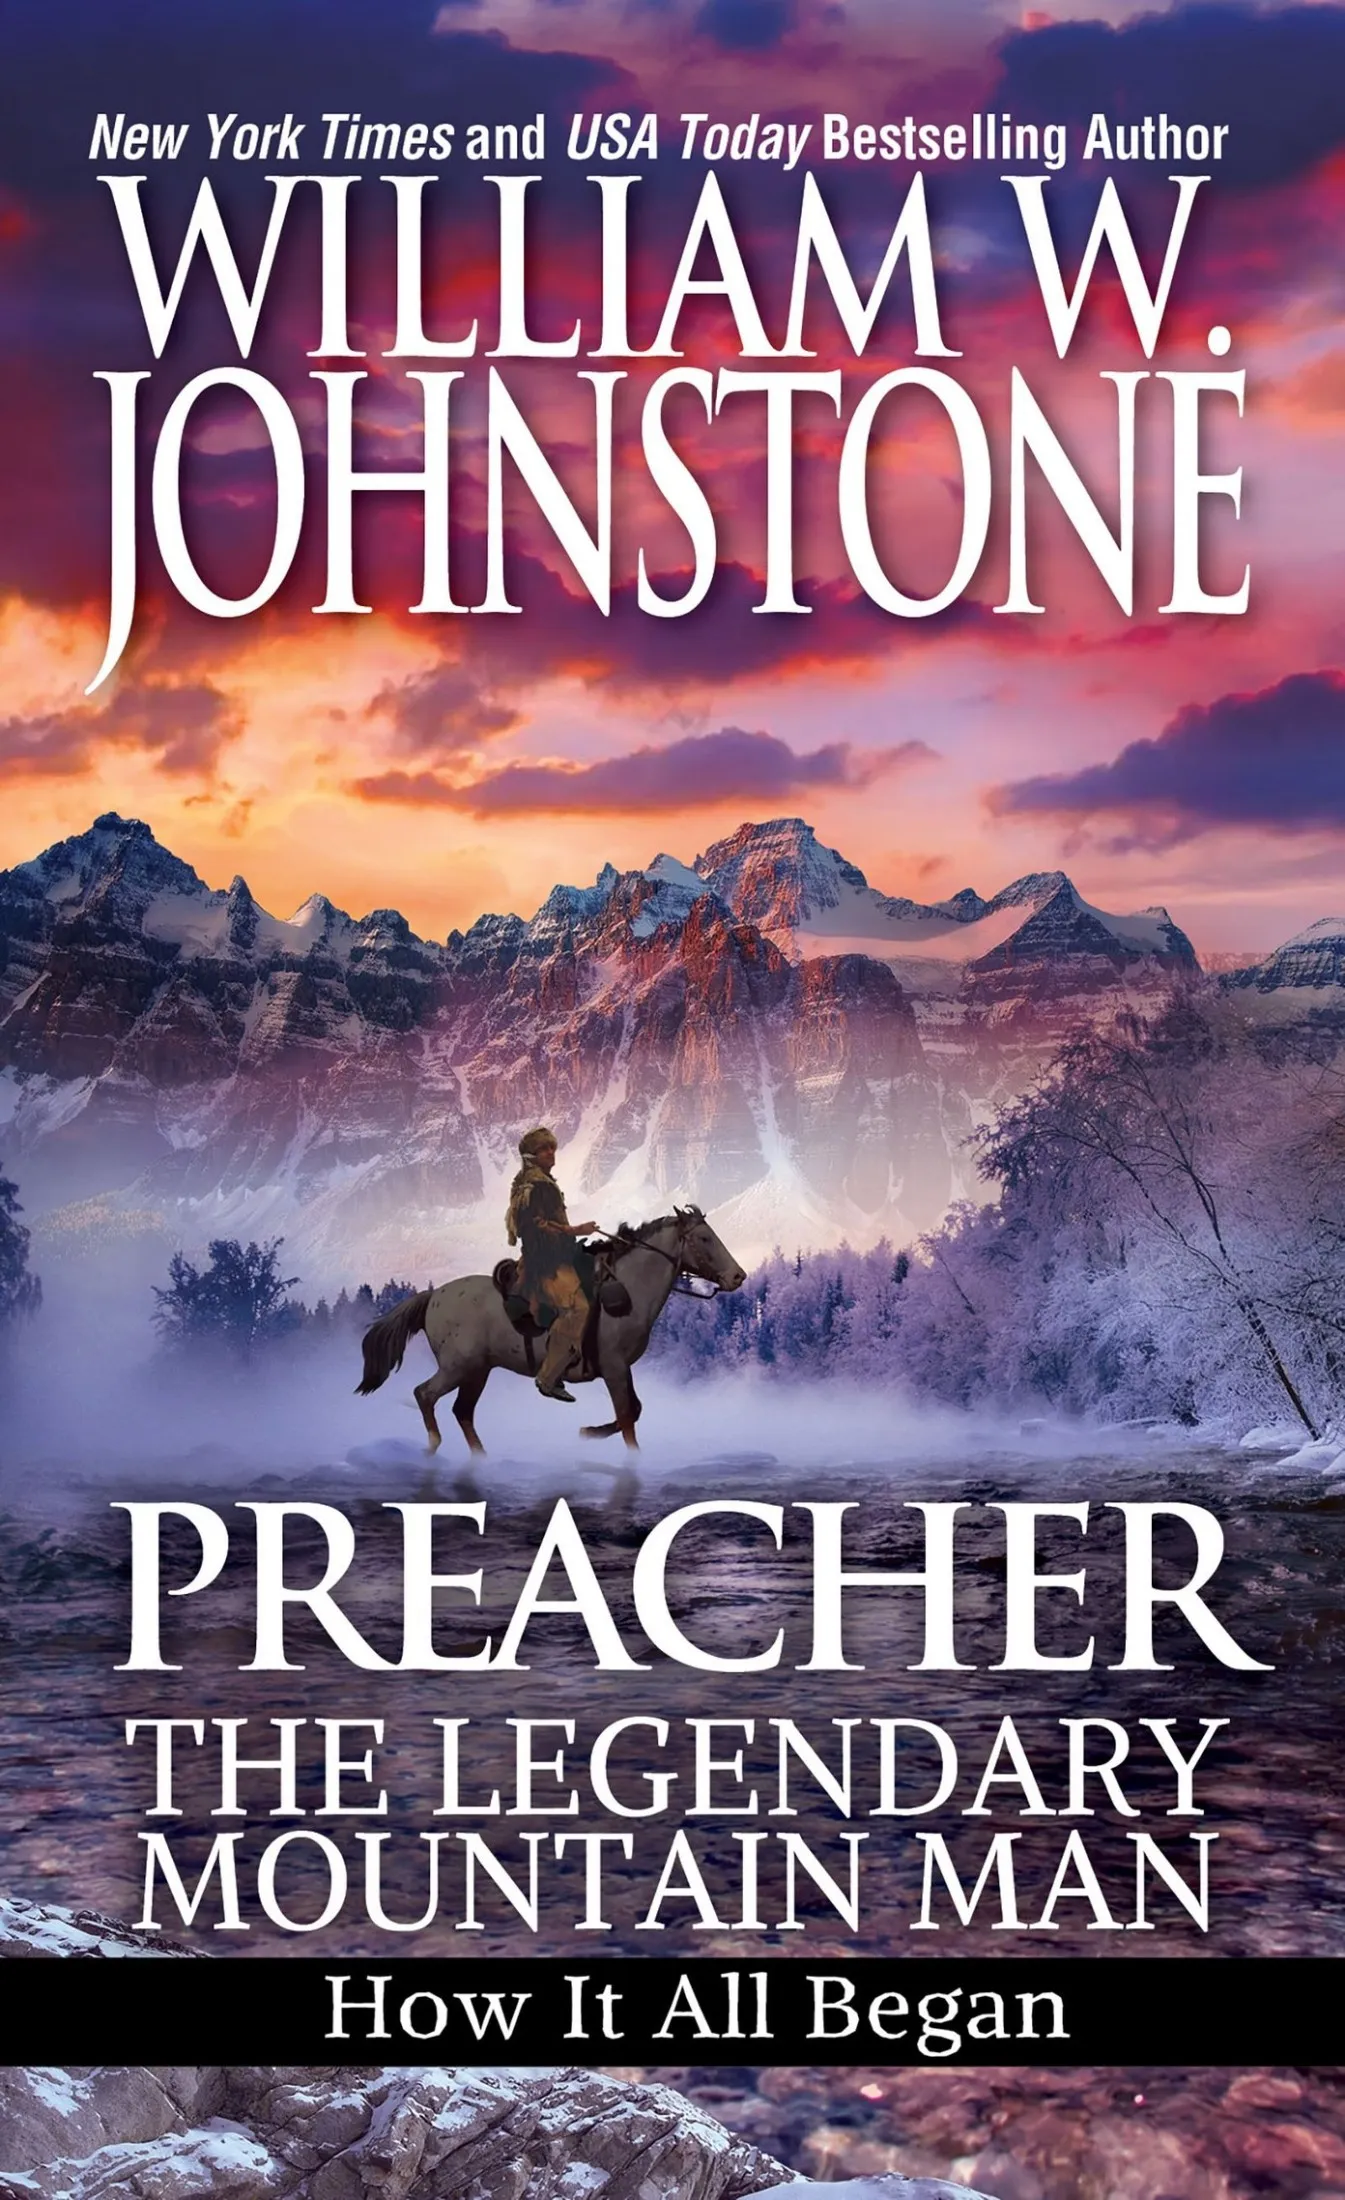 Preacher (The First Mountain Man #8)